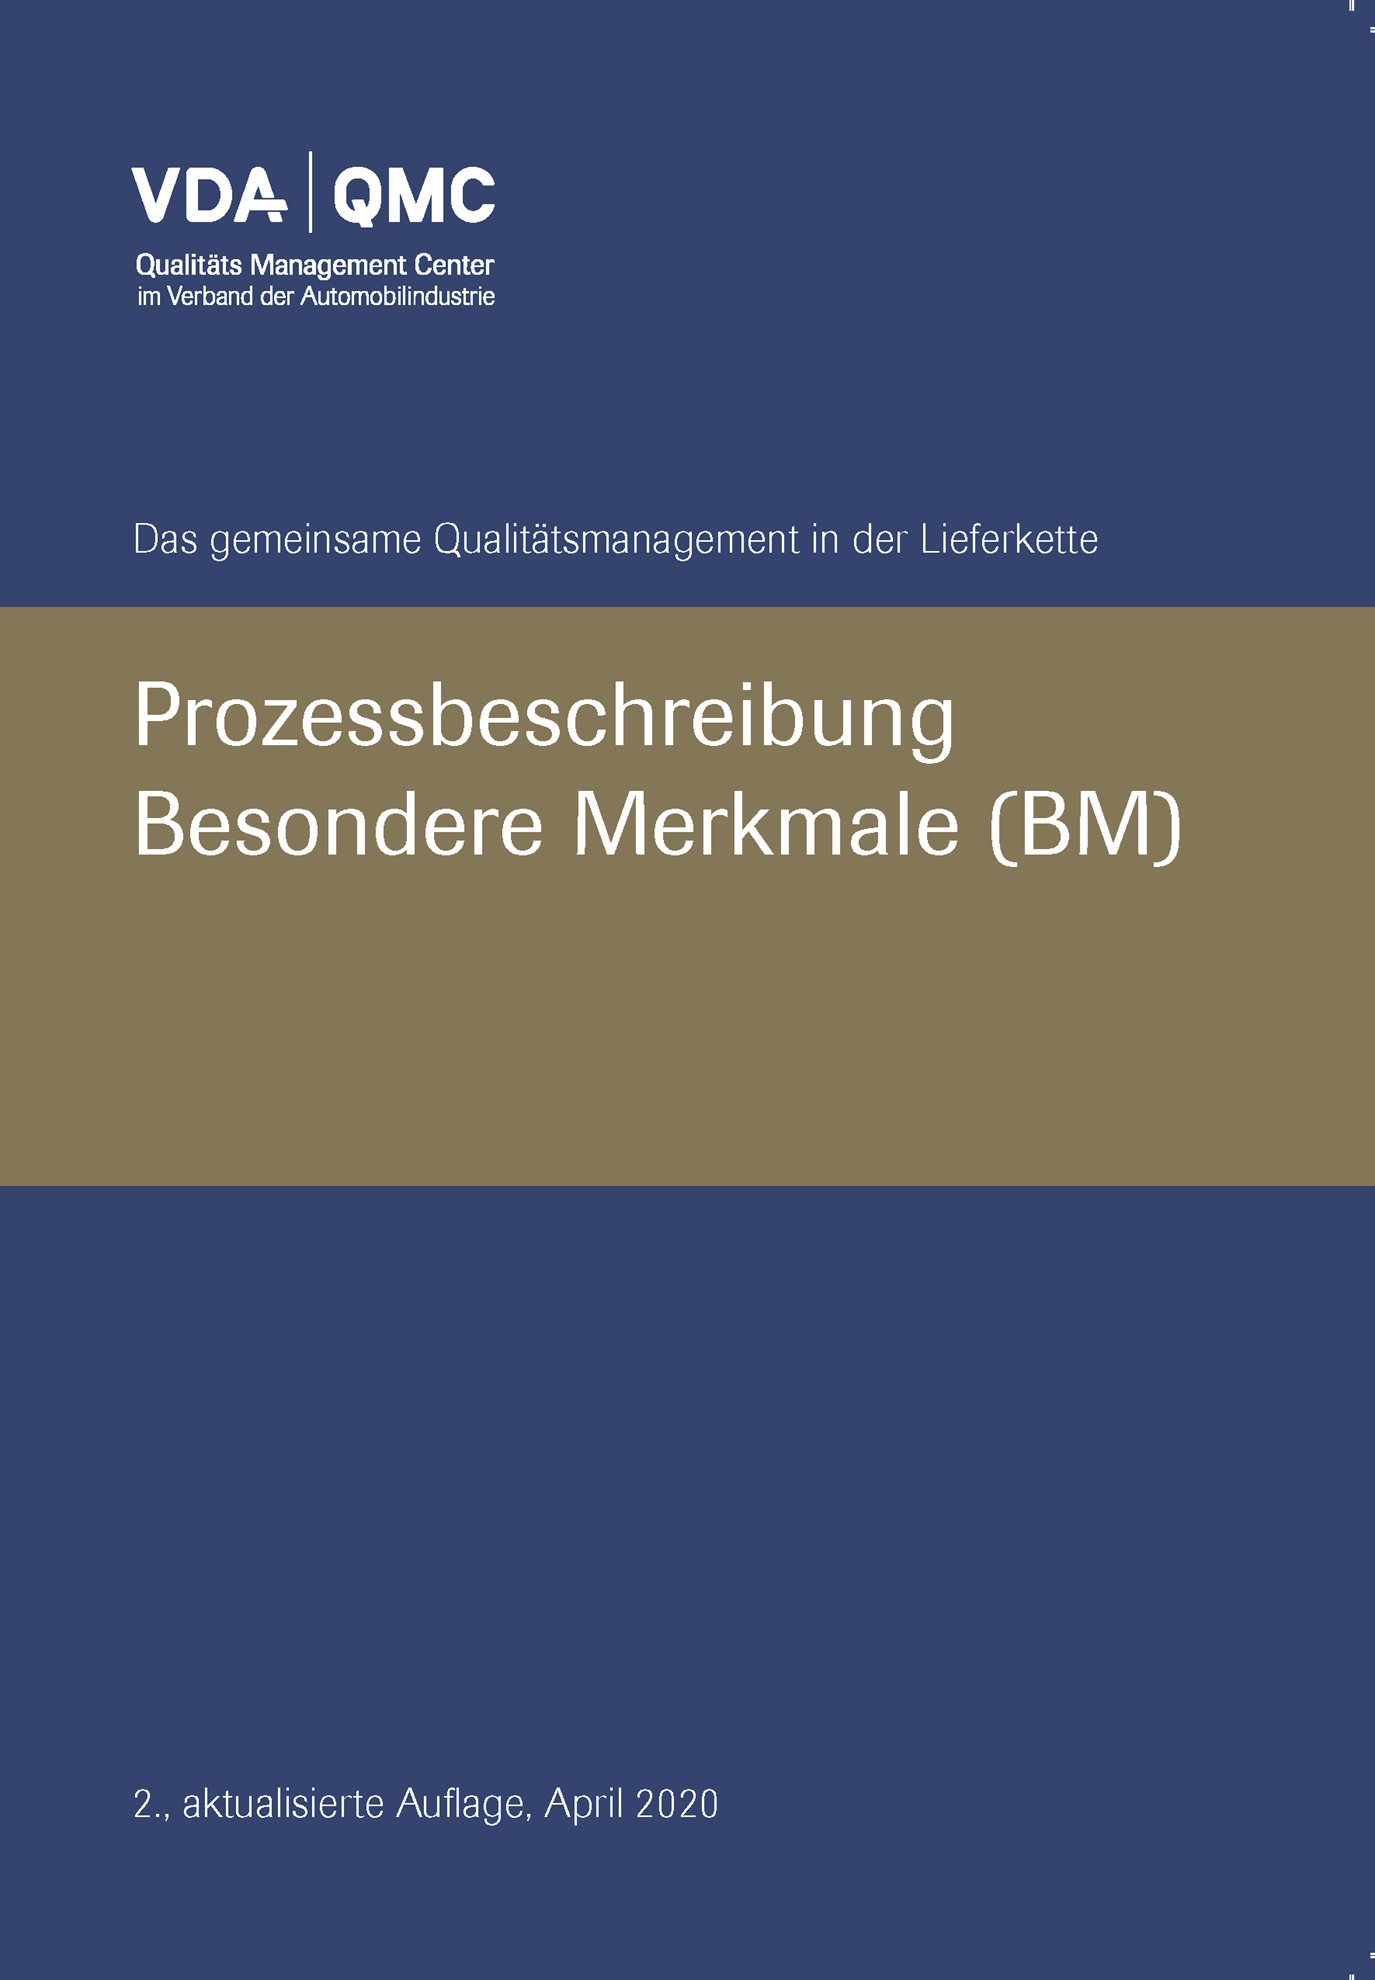 Publications  VDA Besondere Merkmale, Prozessbeschreibung, 2., aktualisierte Auflage, April 2020 1.4.2020 preview